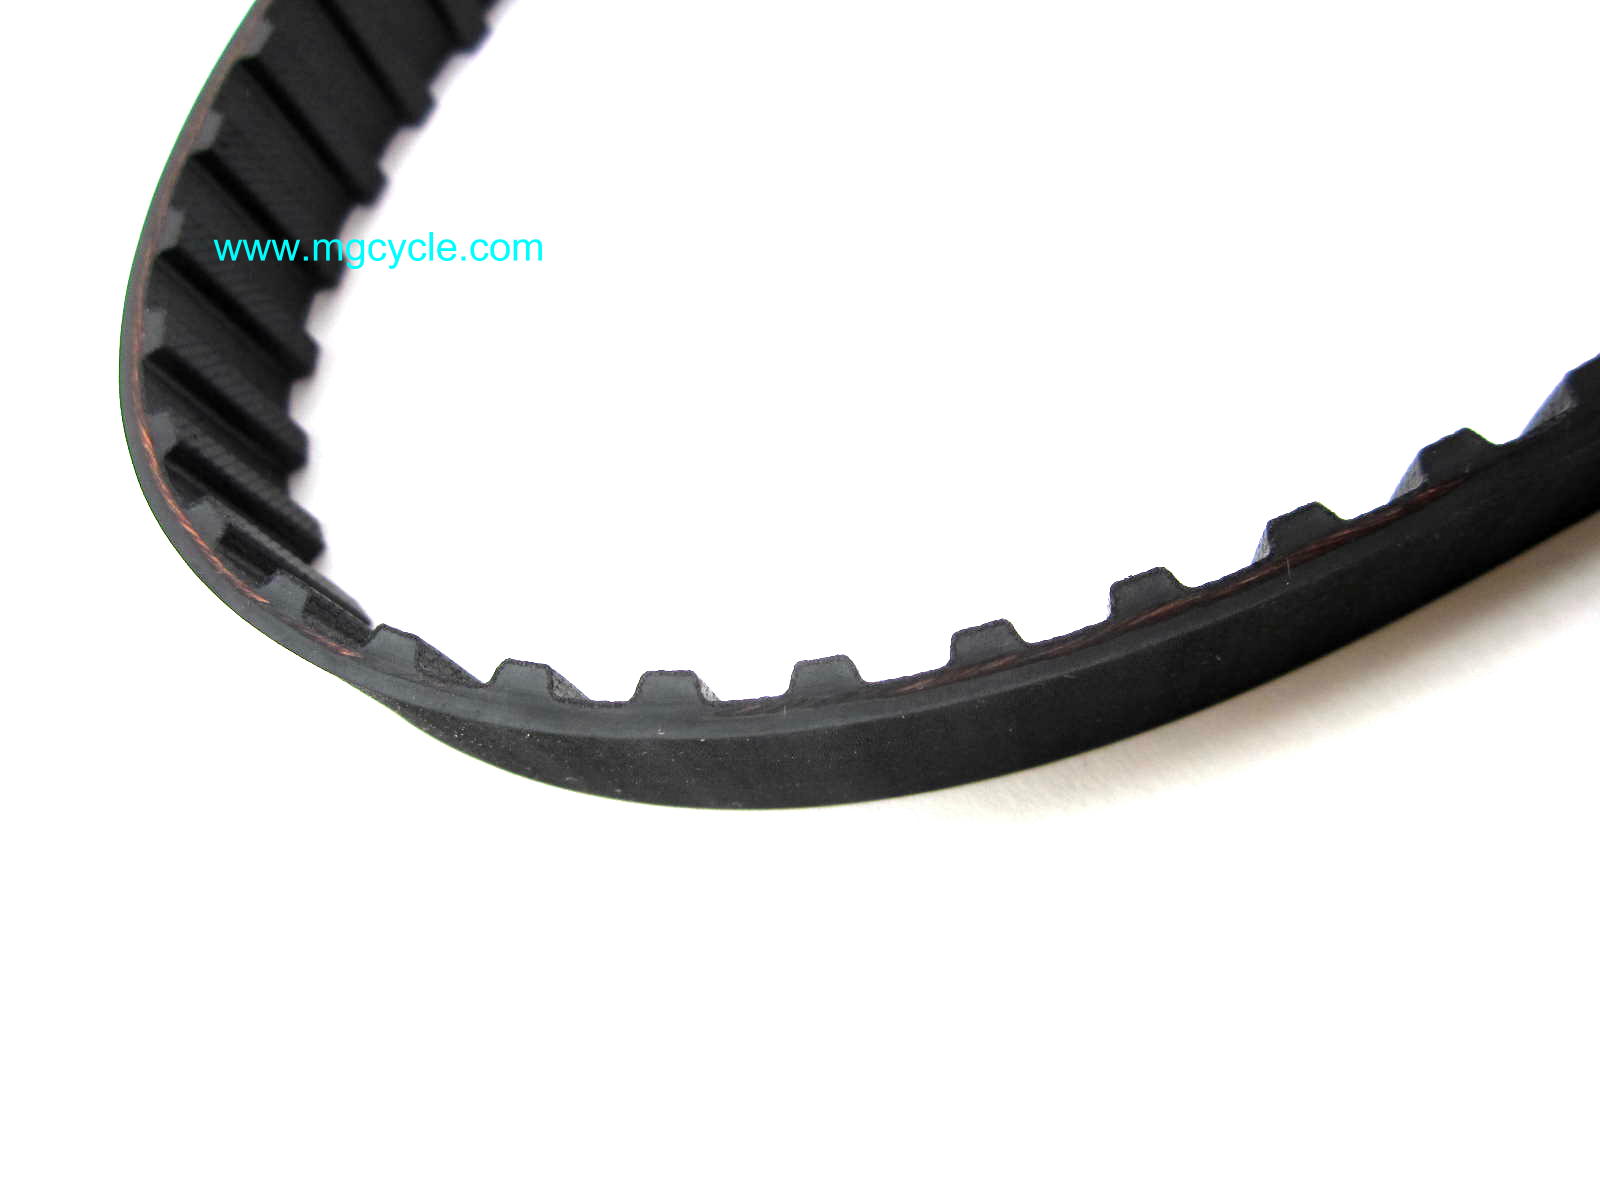 OEM cam belt for Ducati - square tooth profile